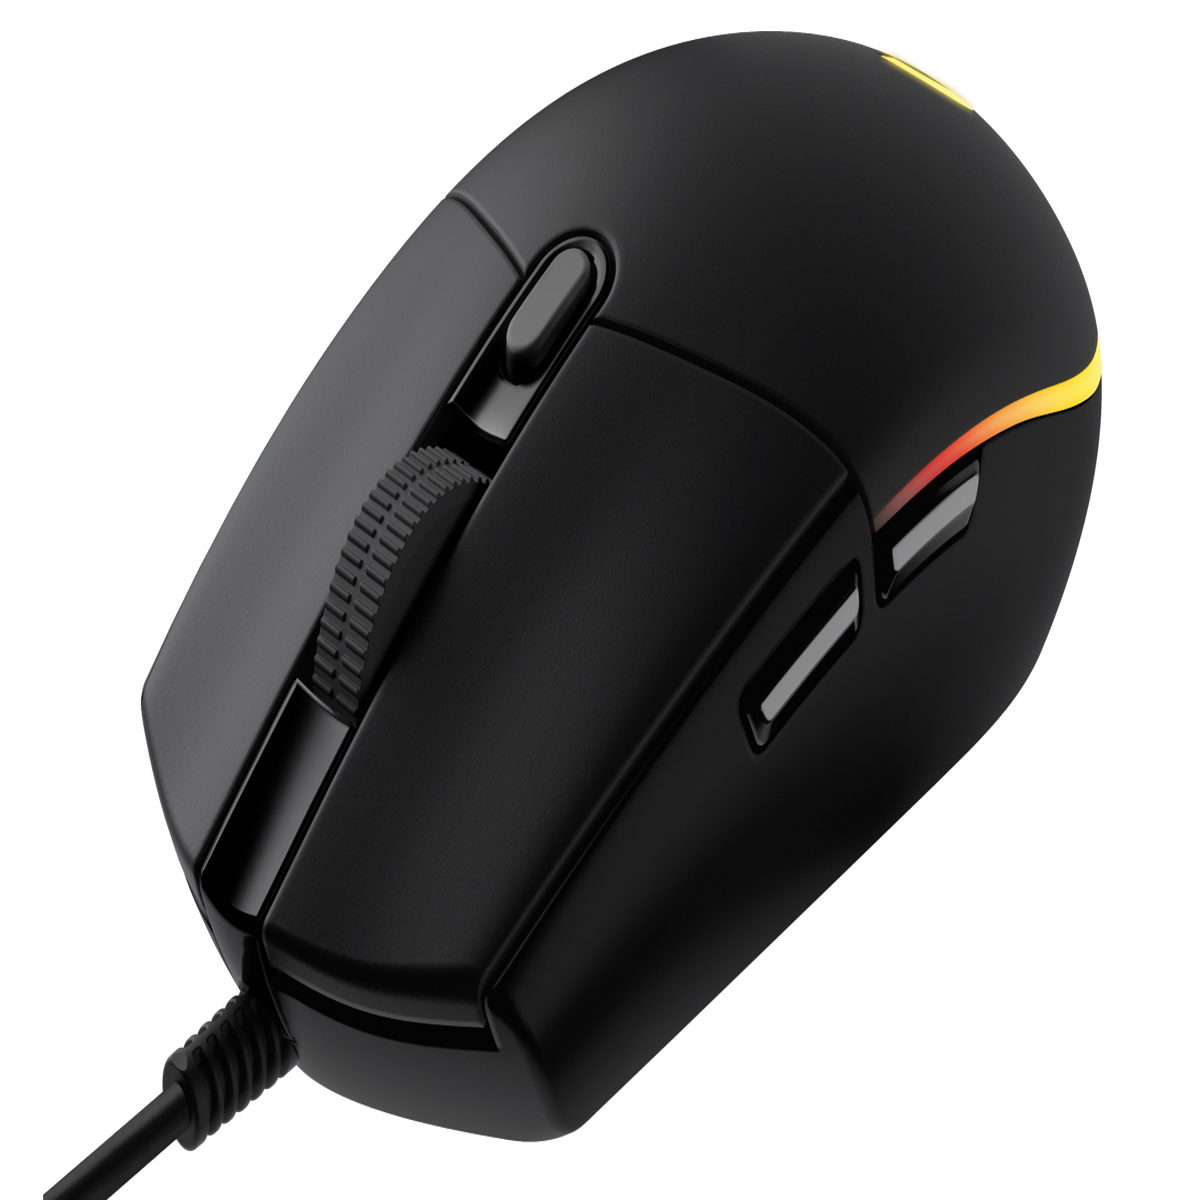 Logitech G203 Lightsync Gaming Mouse - Black 